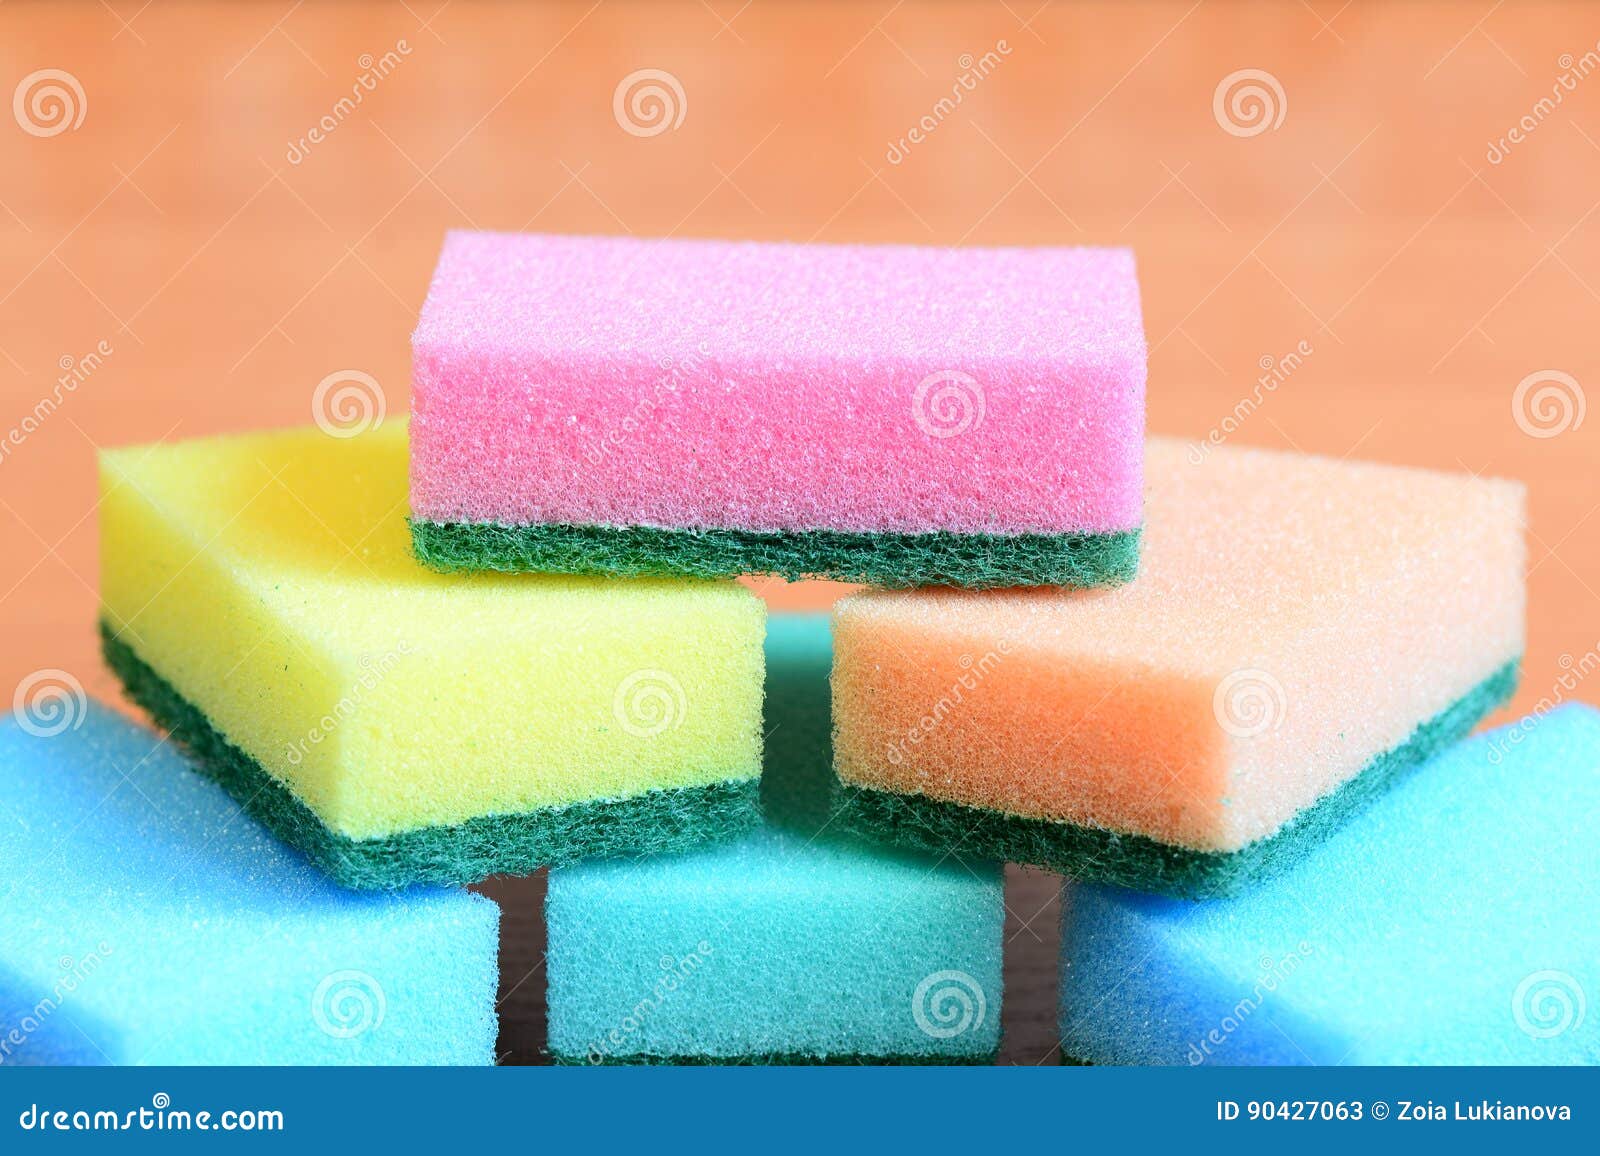 https://thumbs.dreamstime.com/z/colorful-sponge-cleaning-ware-house-cleaning-cleaning-sponge-scrub-set-closeup-materials-90427063.jpg